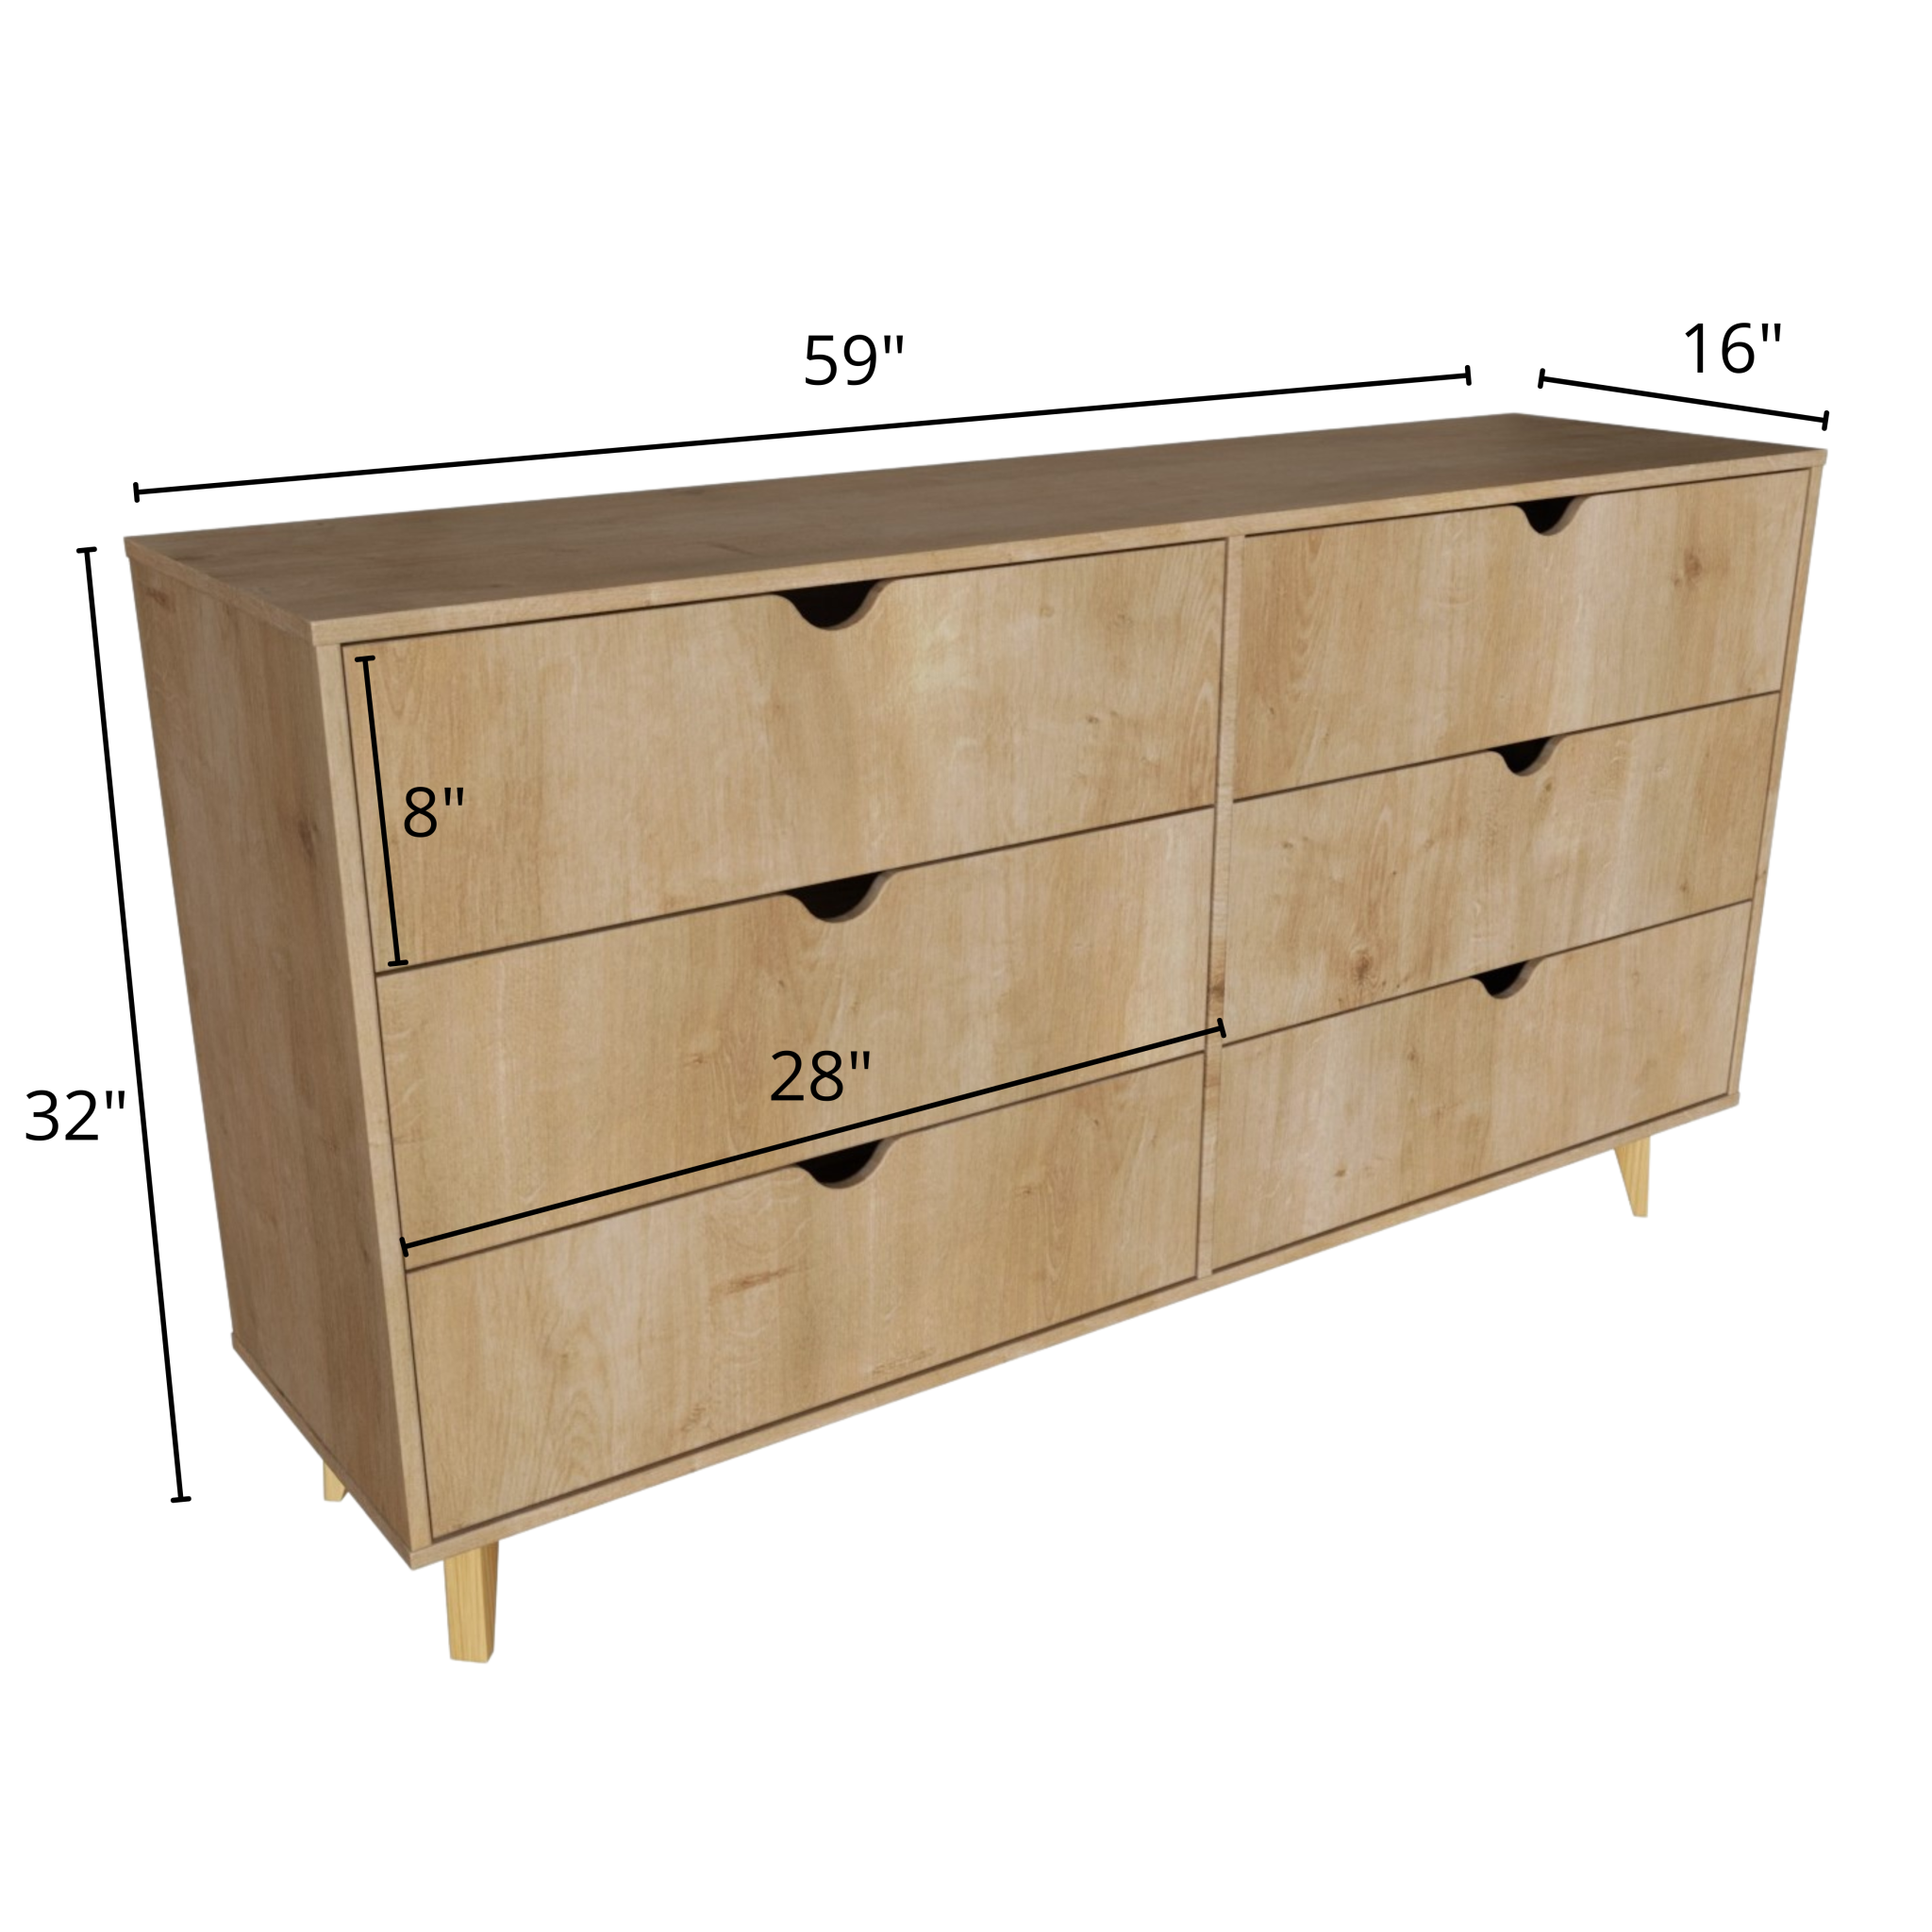 59" Natural Scoop Handle Six Drawer Double Dresser